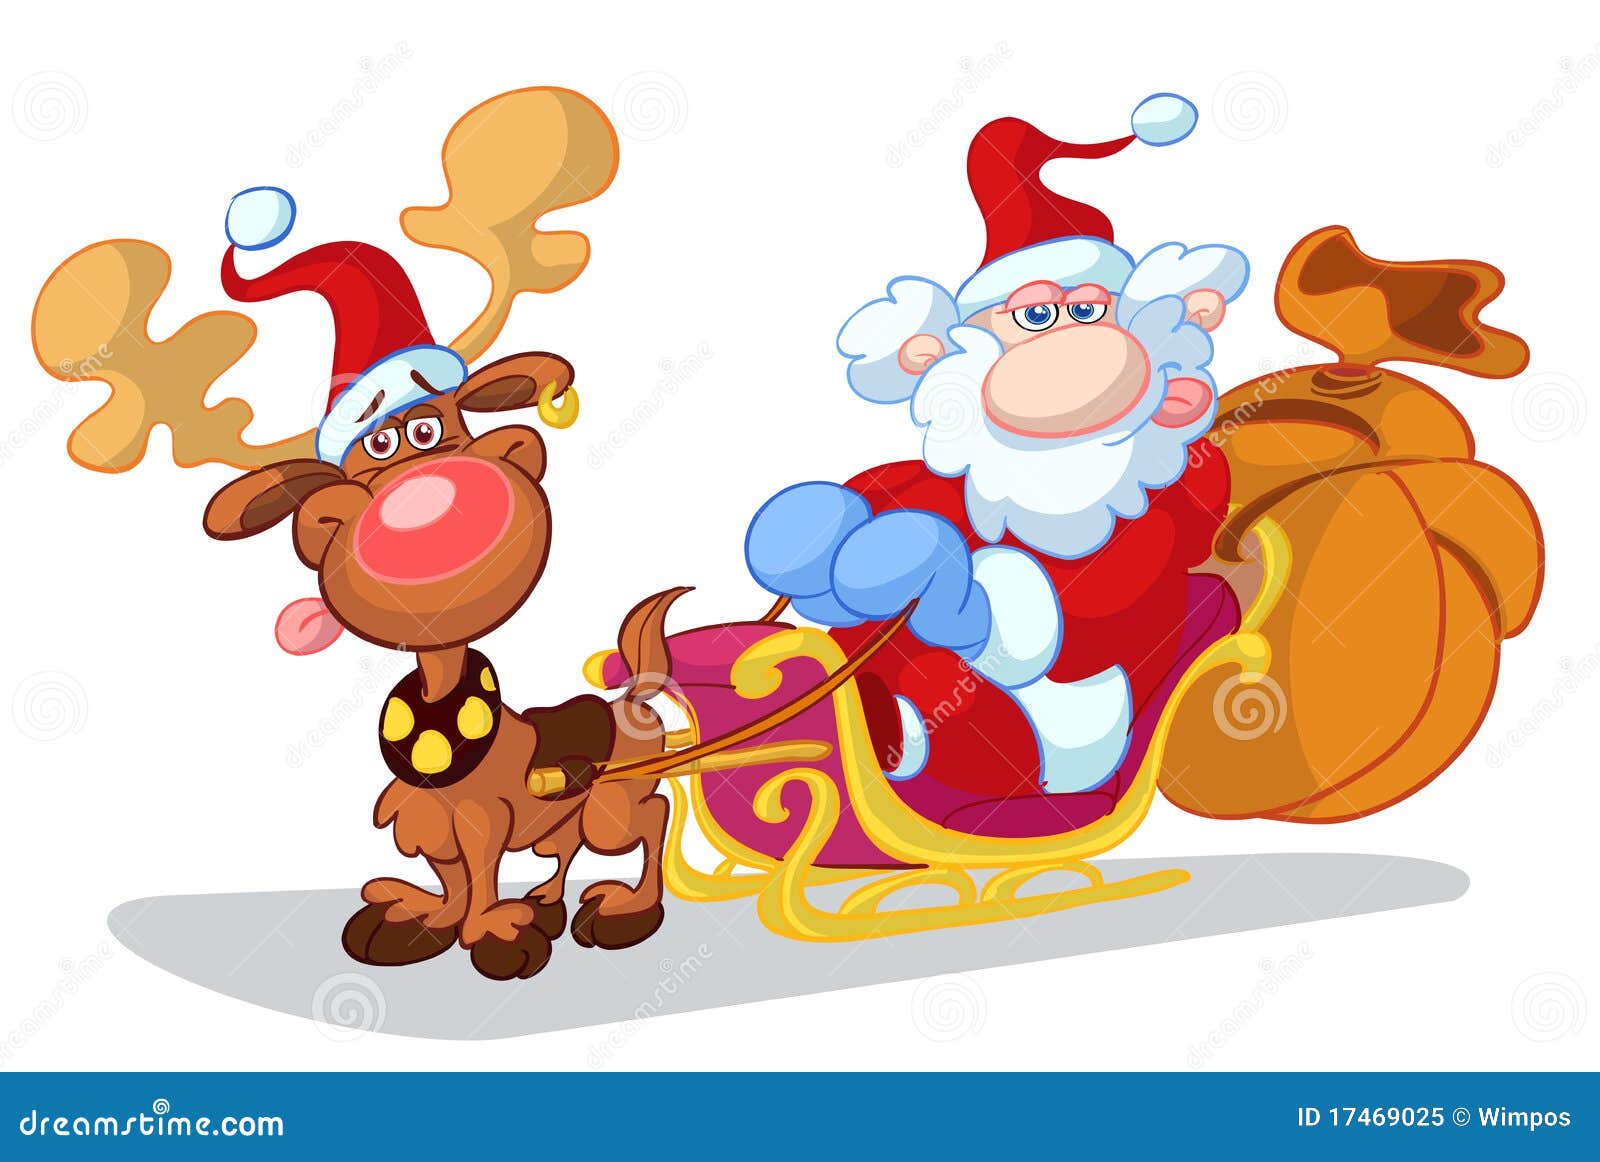 Christmas Cartoon Royalty Free Stock Photo - Image: 17469025